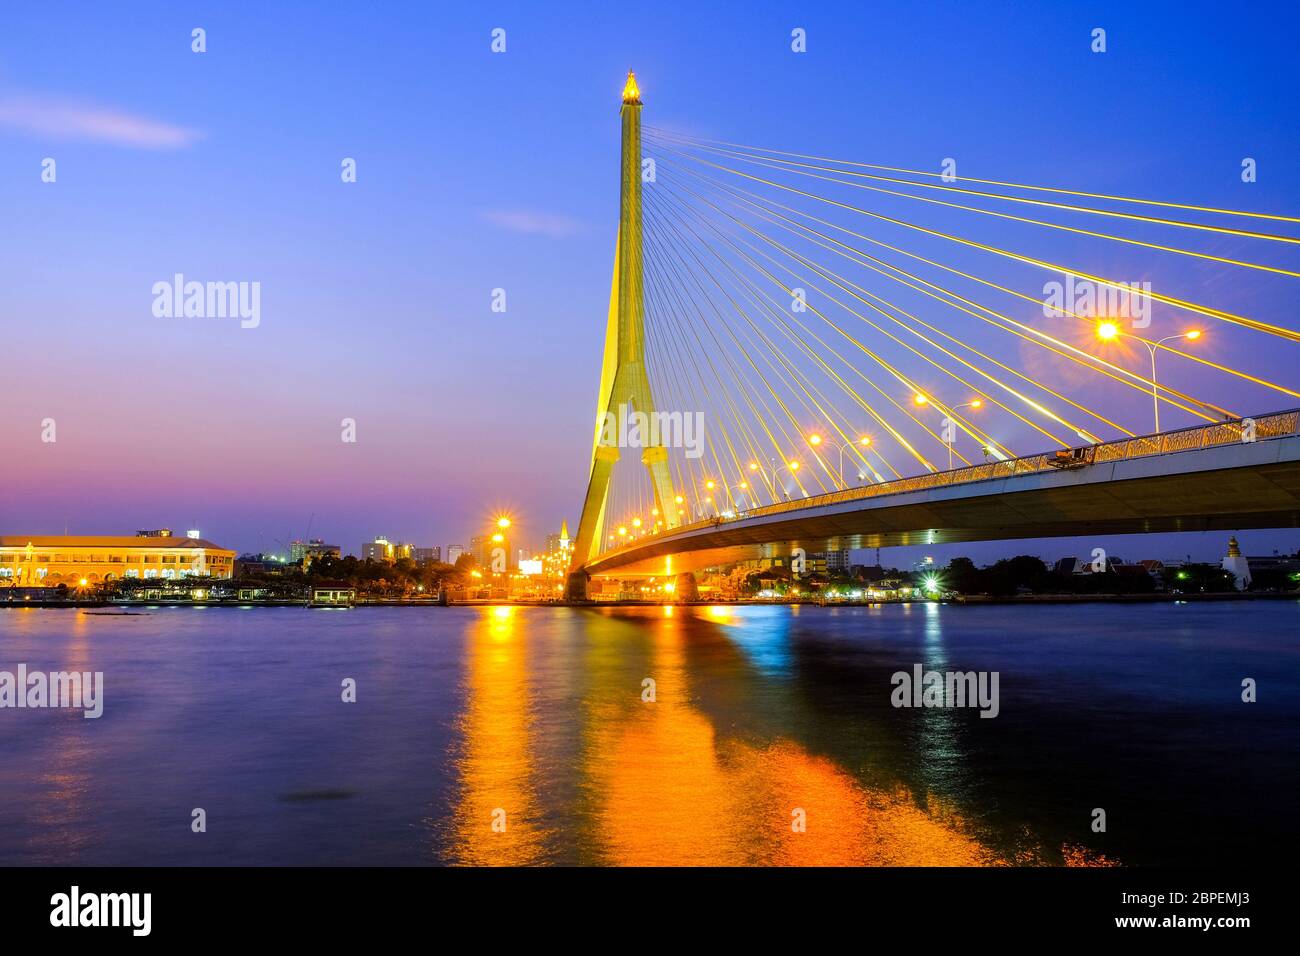 Rama VIII Brücke mit schönen in der Dämmerung Himmel Onchao Phraya River, Bangkok, Thailand Stockfoto